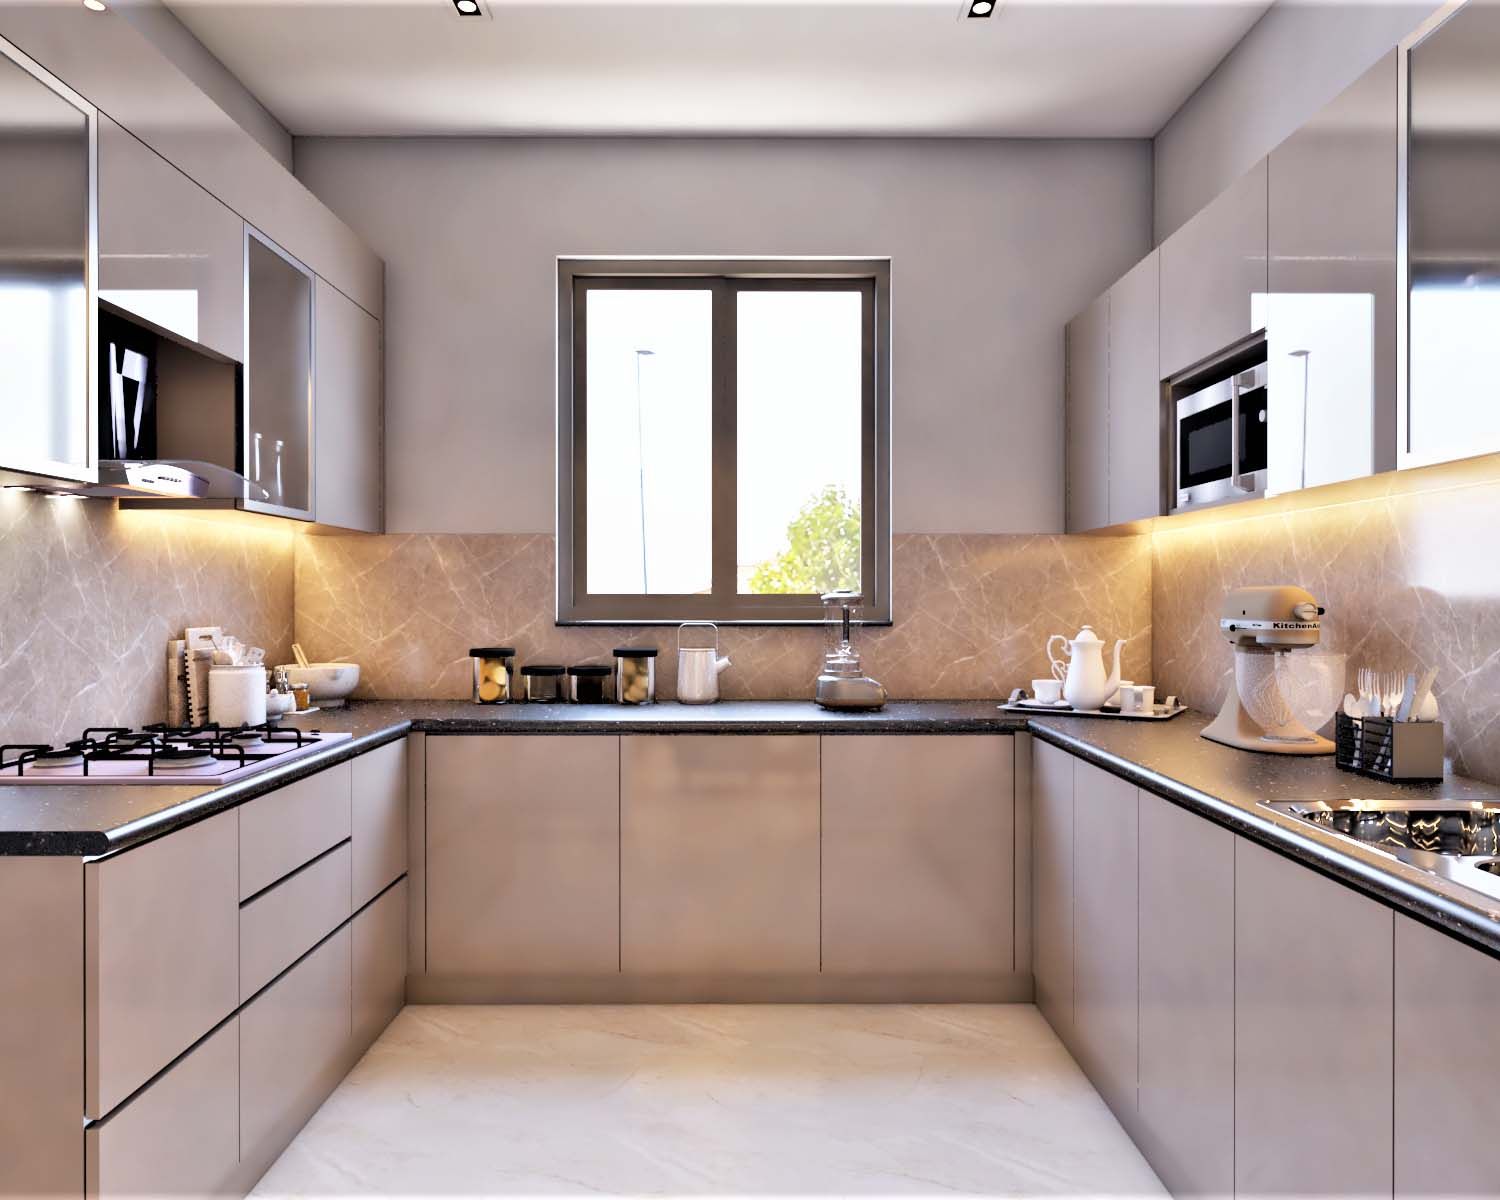 Contemporay U-Shape Kitchen Design with Gola Profile Handles